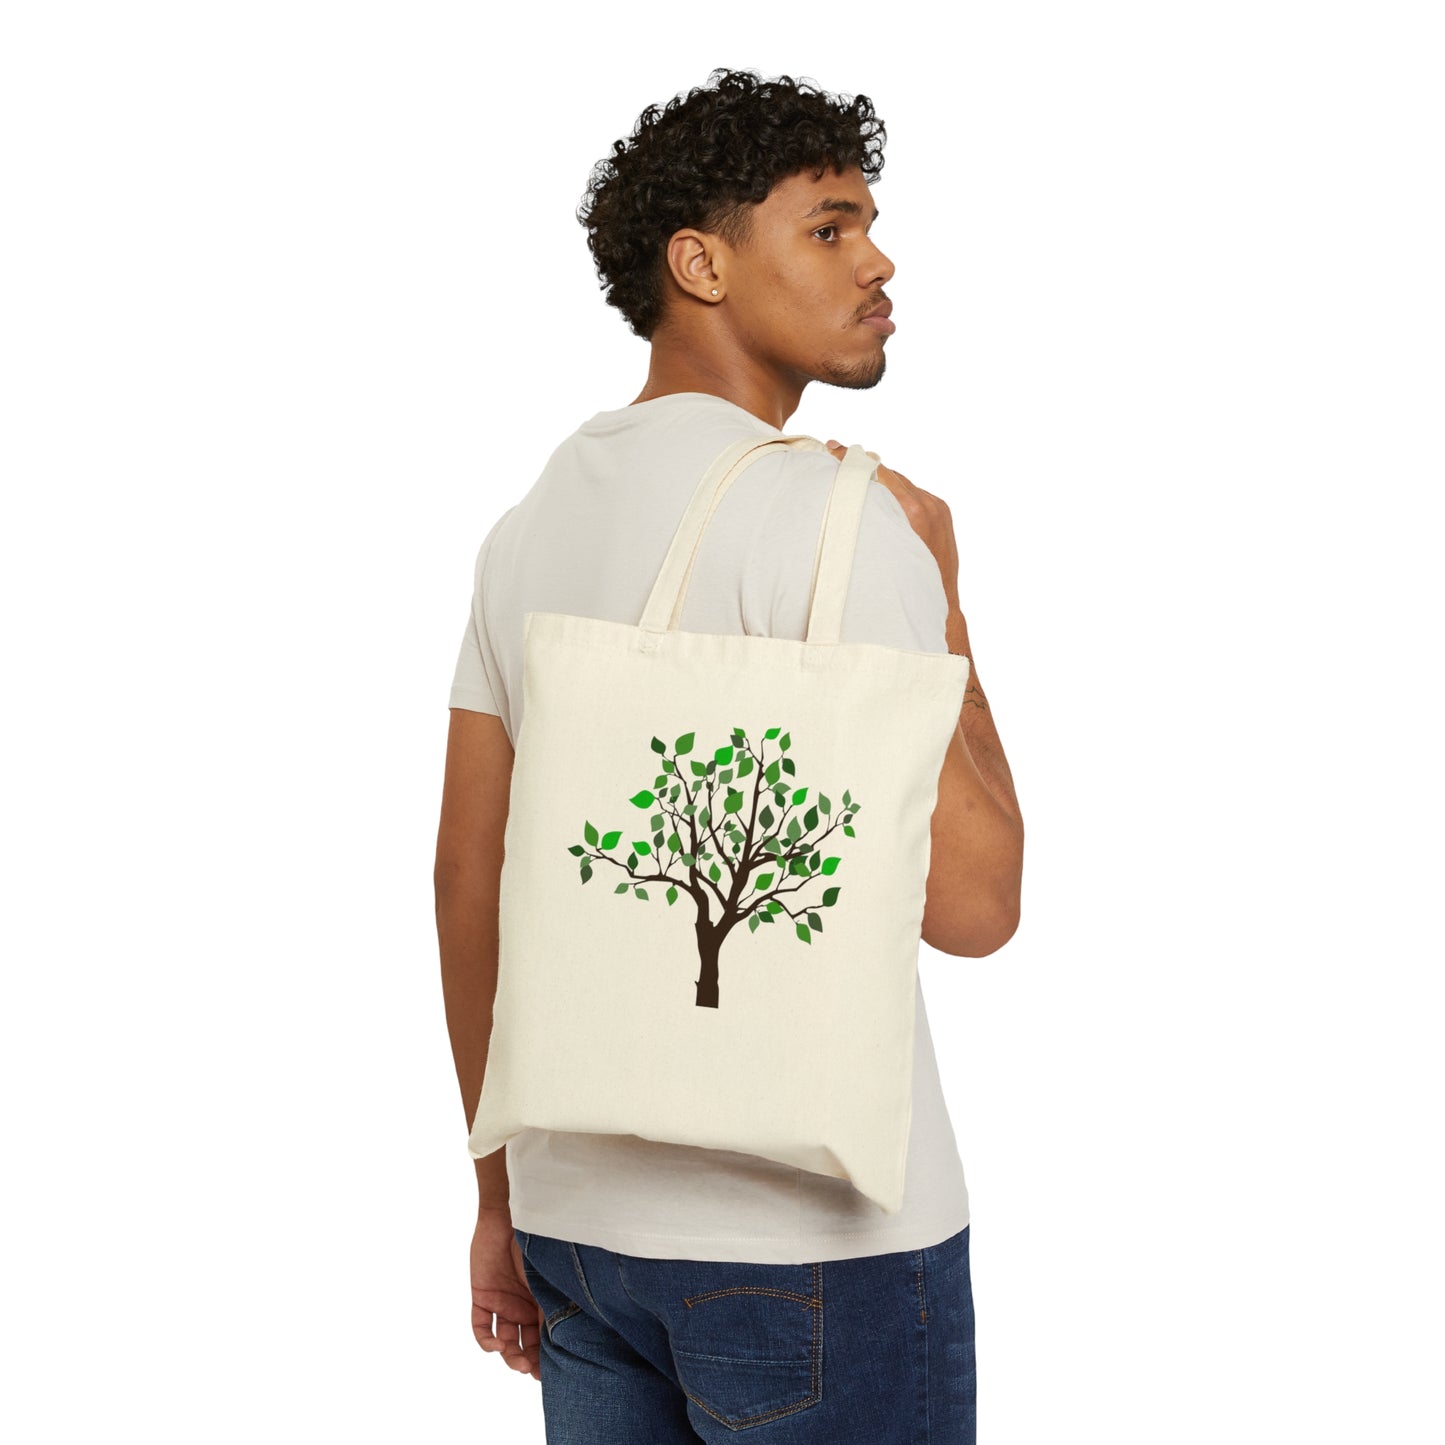 Springtime Tree - Canvas Tote Bag